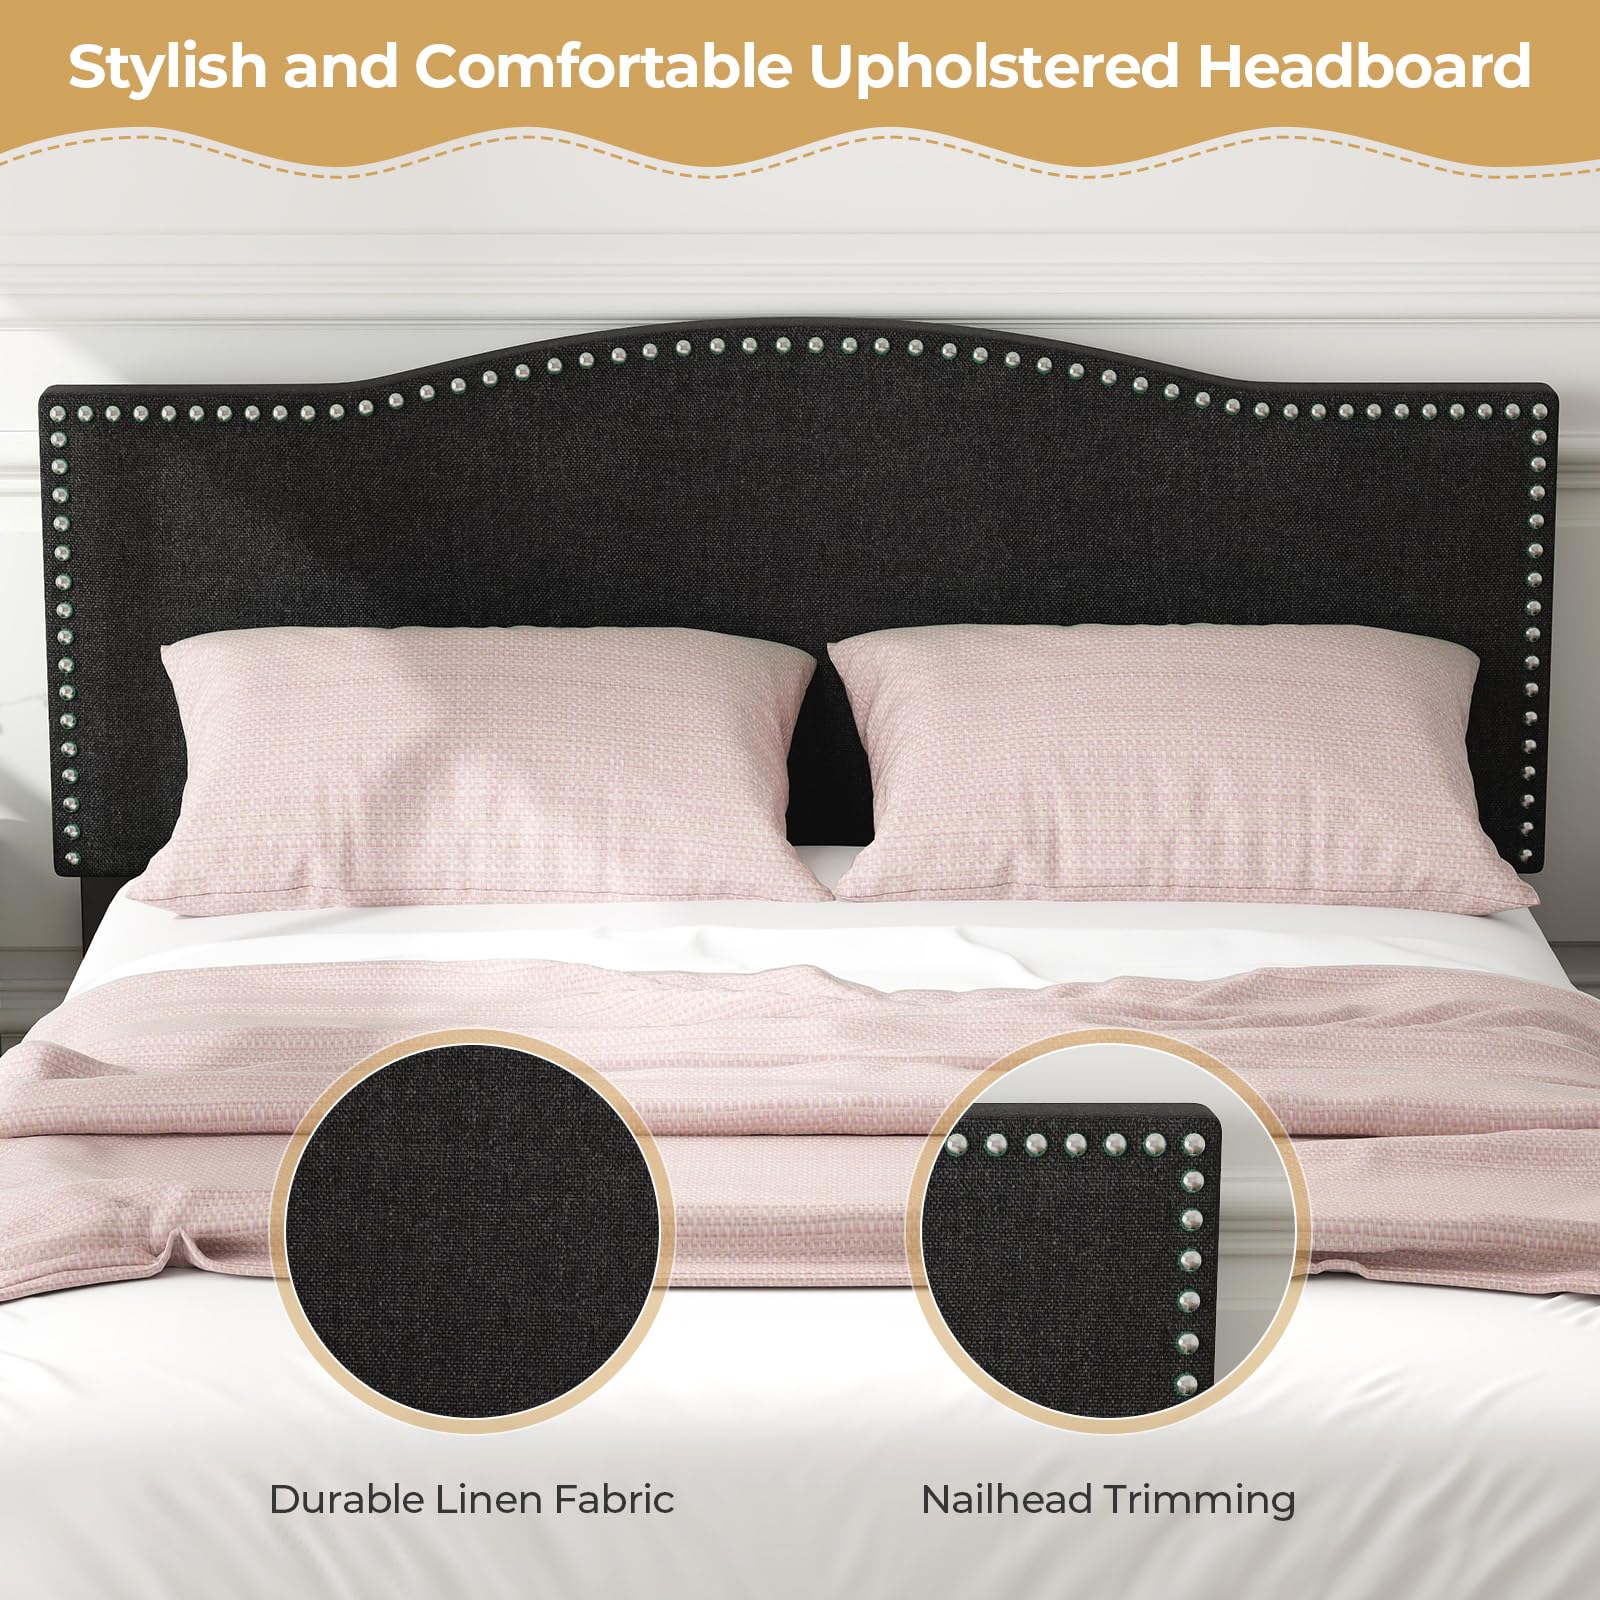 Giantex Queen Bed Frame with Headboard